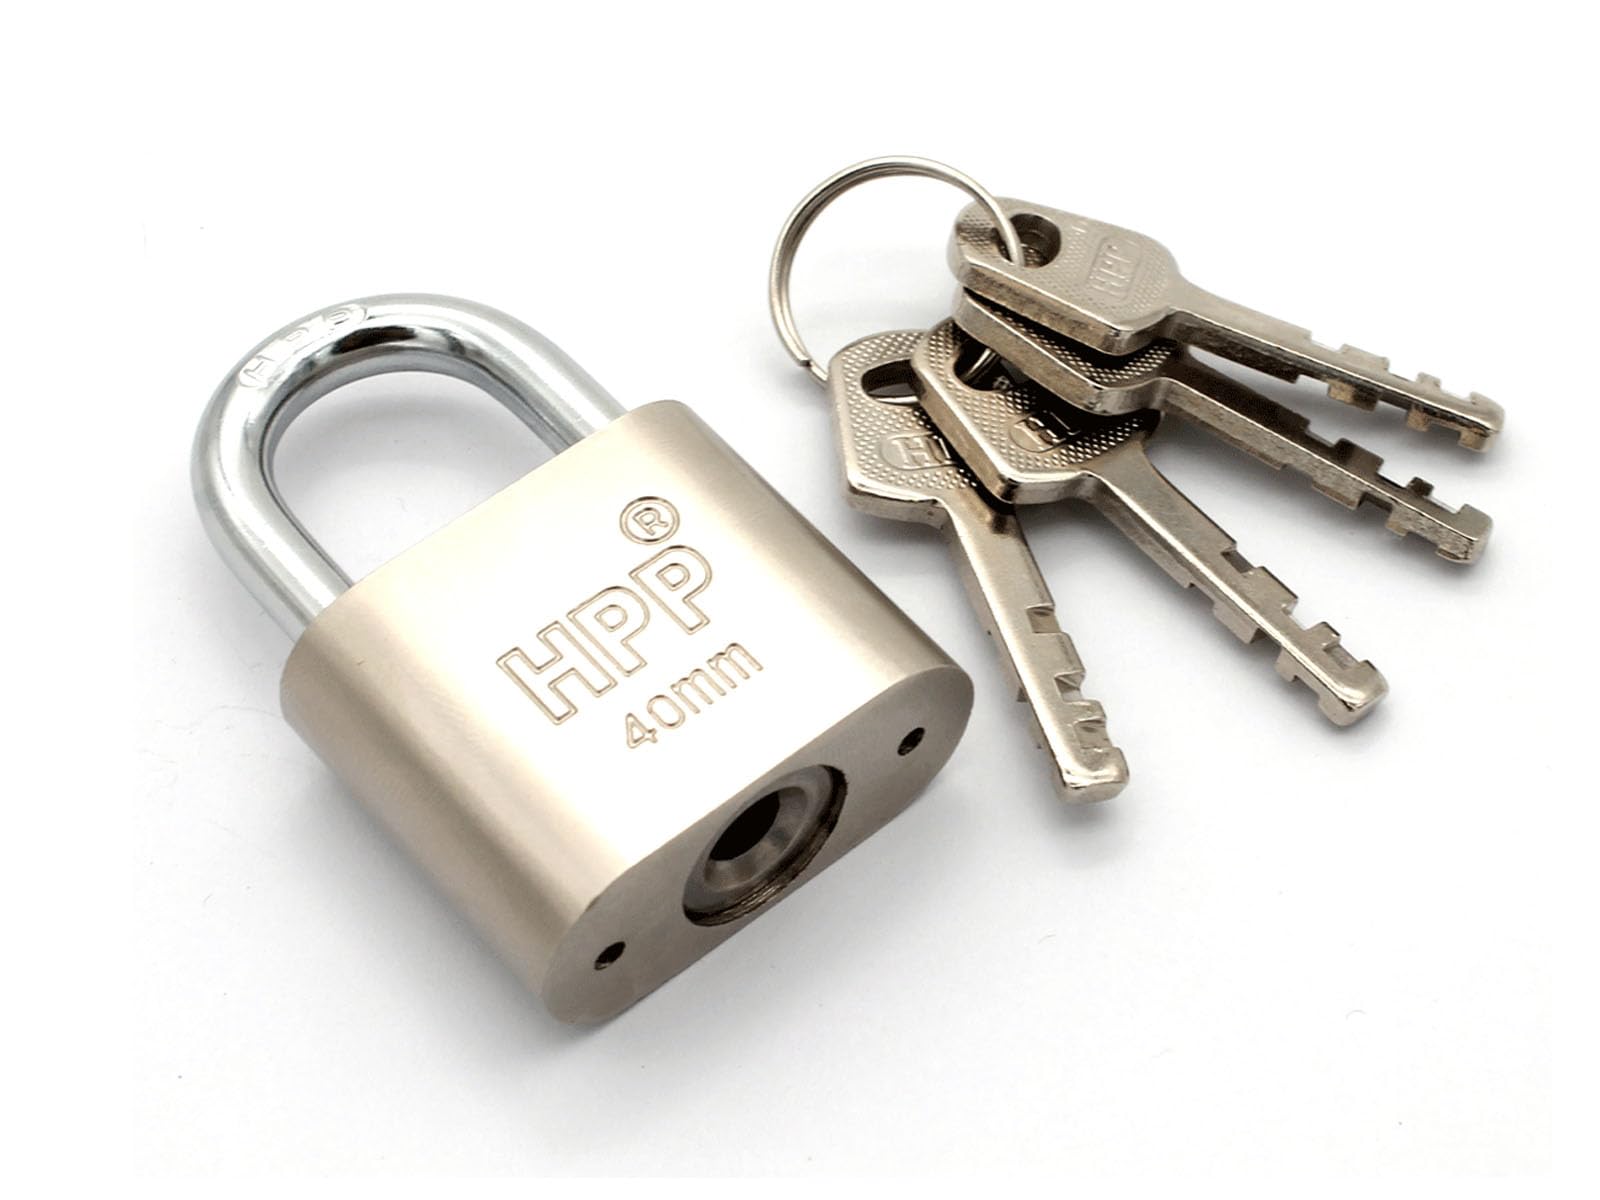 Image of a lock or padlock